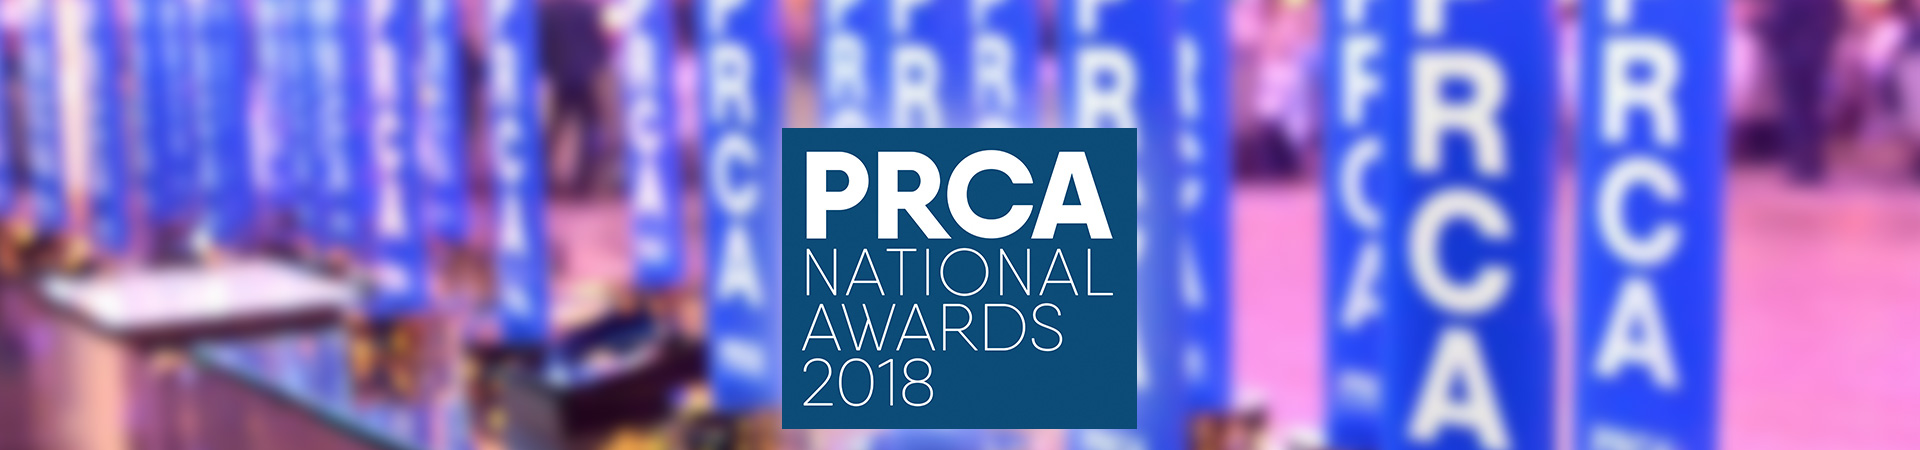 PRCA-Awards-release